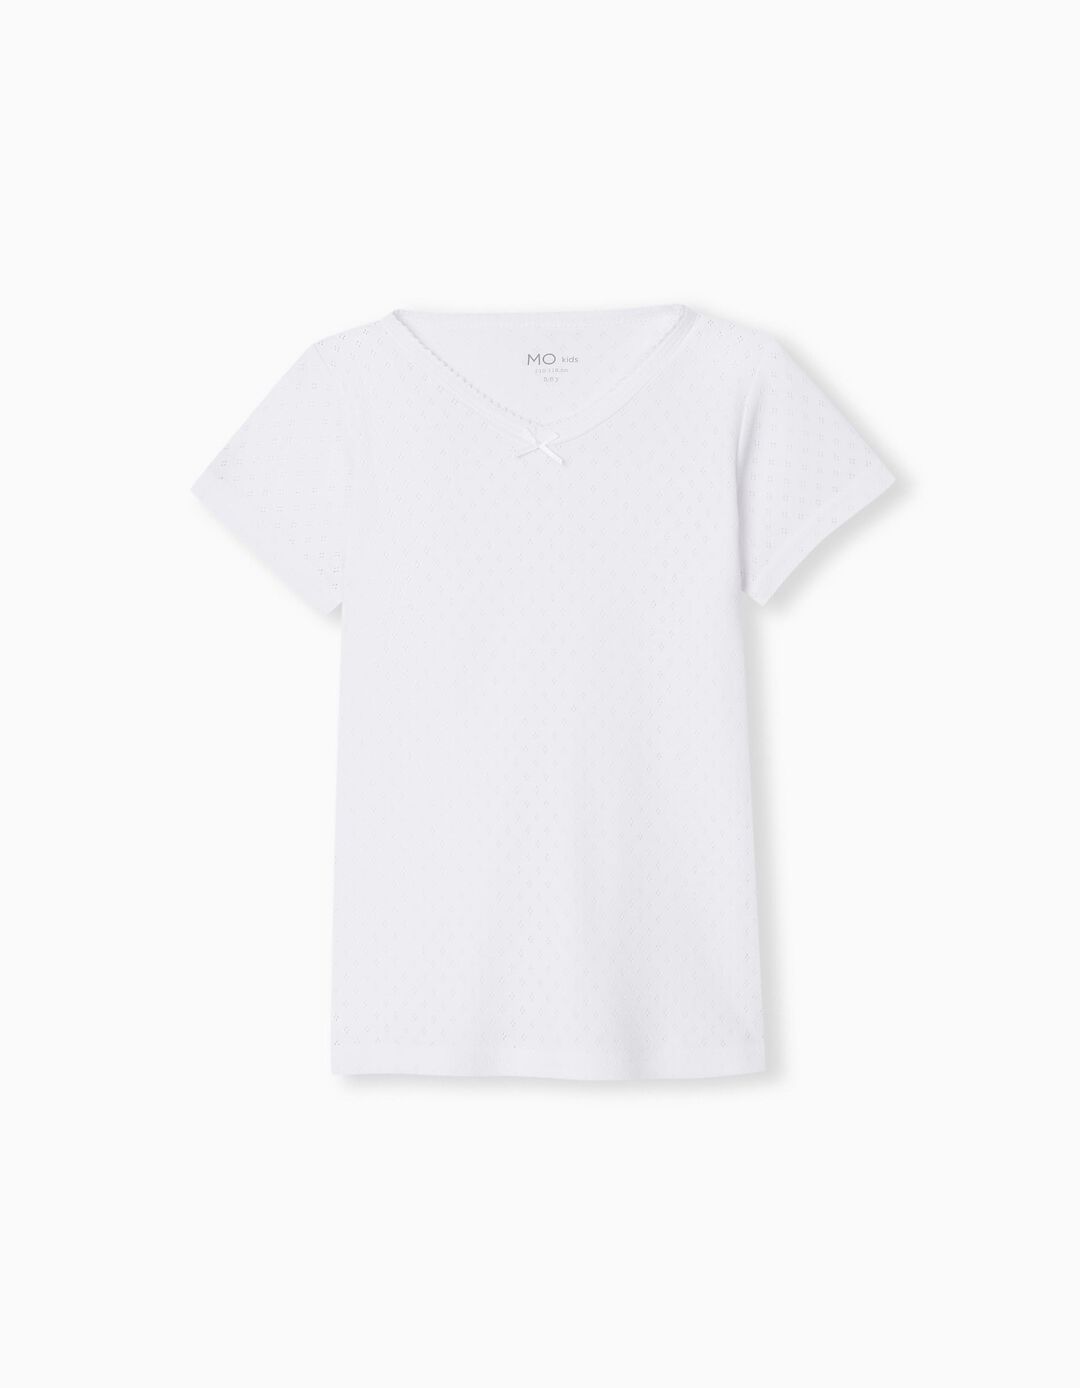 2 Microperforated Short Sleeve Underwear T-shirts Pack, Girls, White